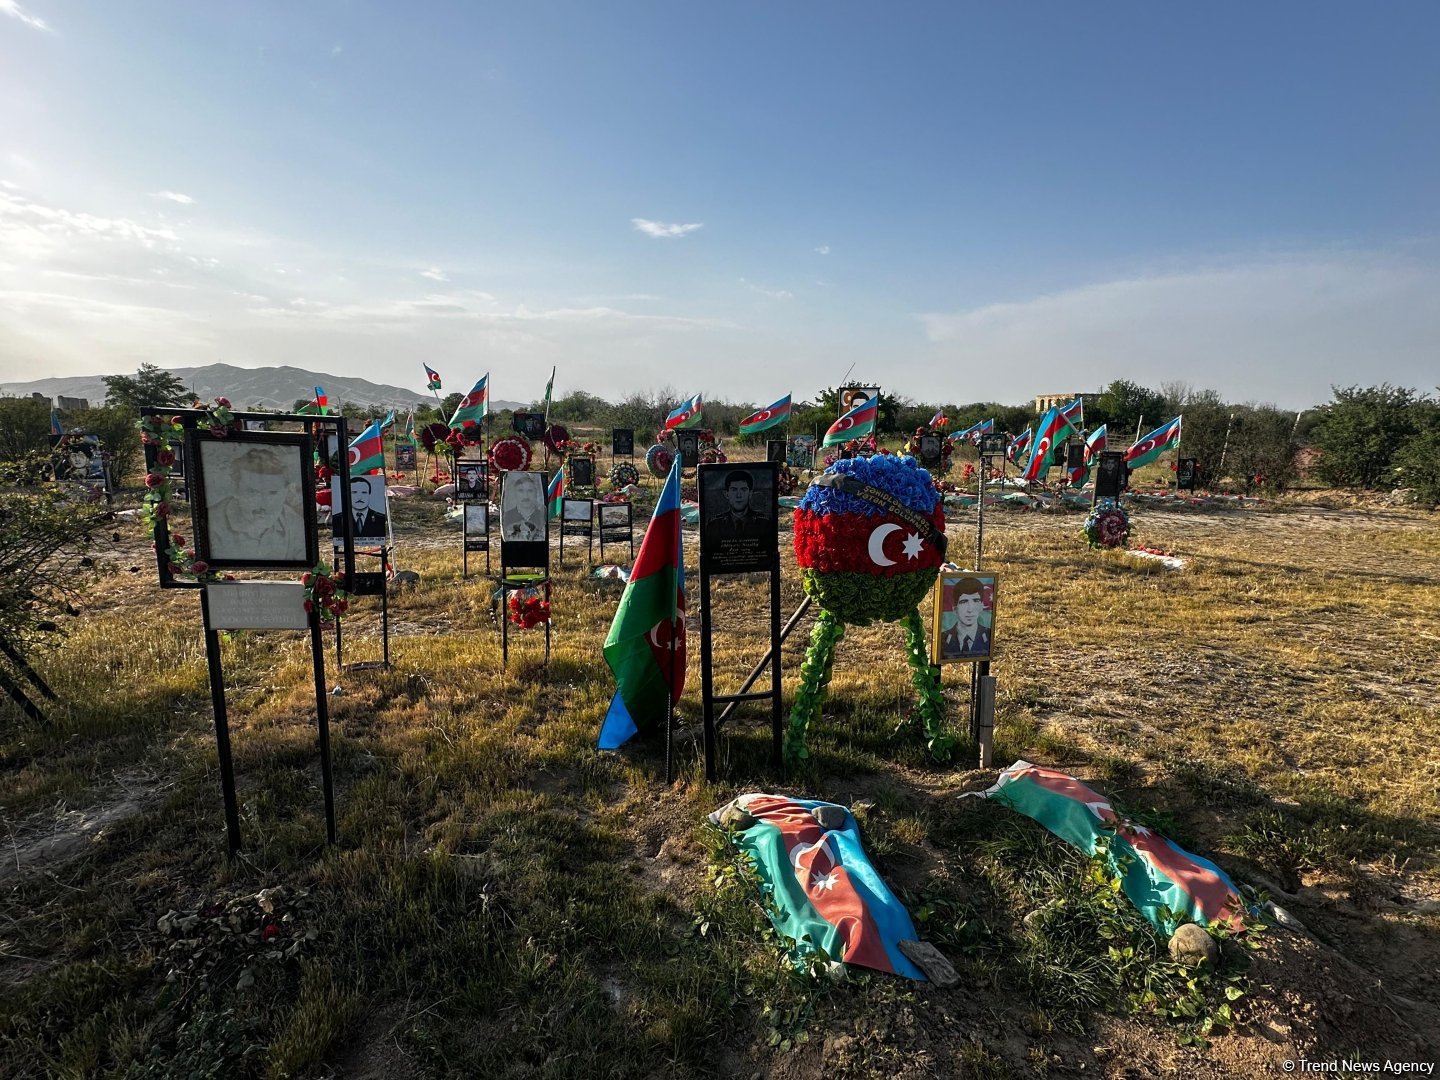 Norwegian travelers' visit to Azerbaijan's Aghdam comes to end (PHOTO)